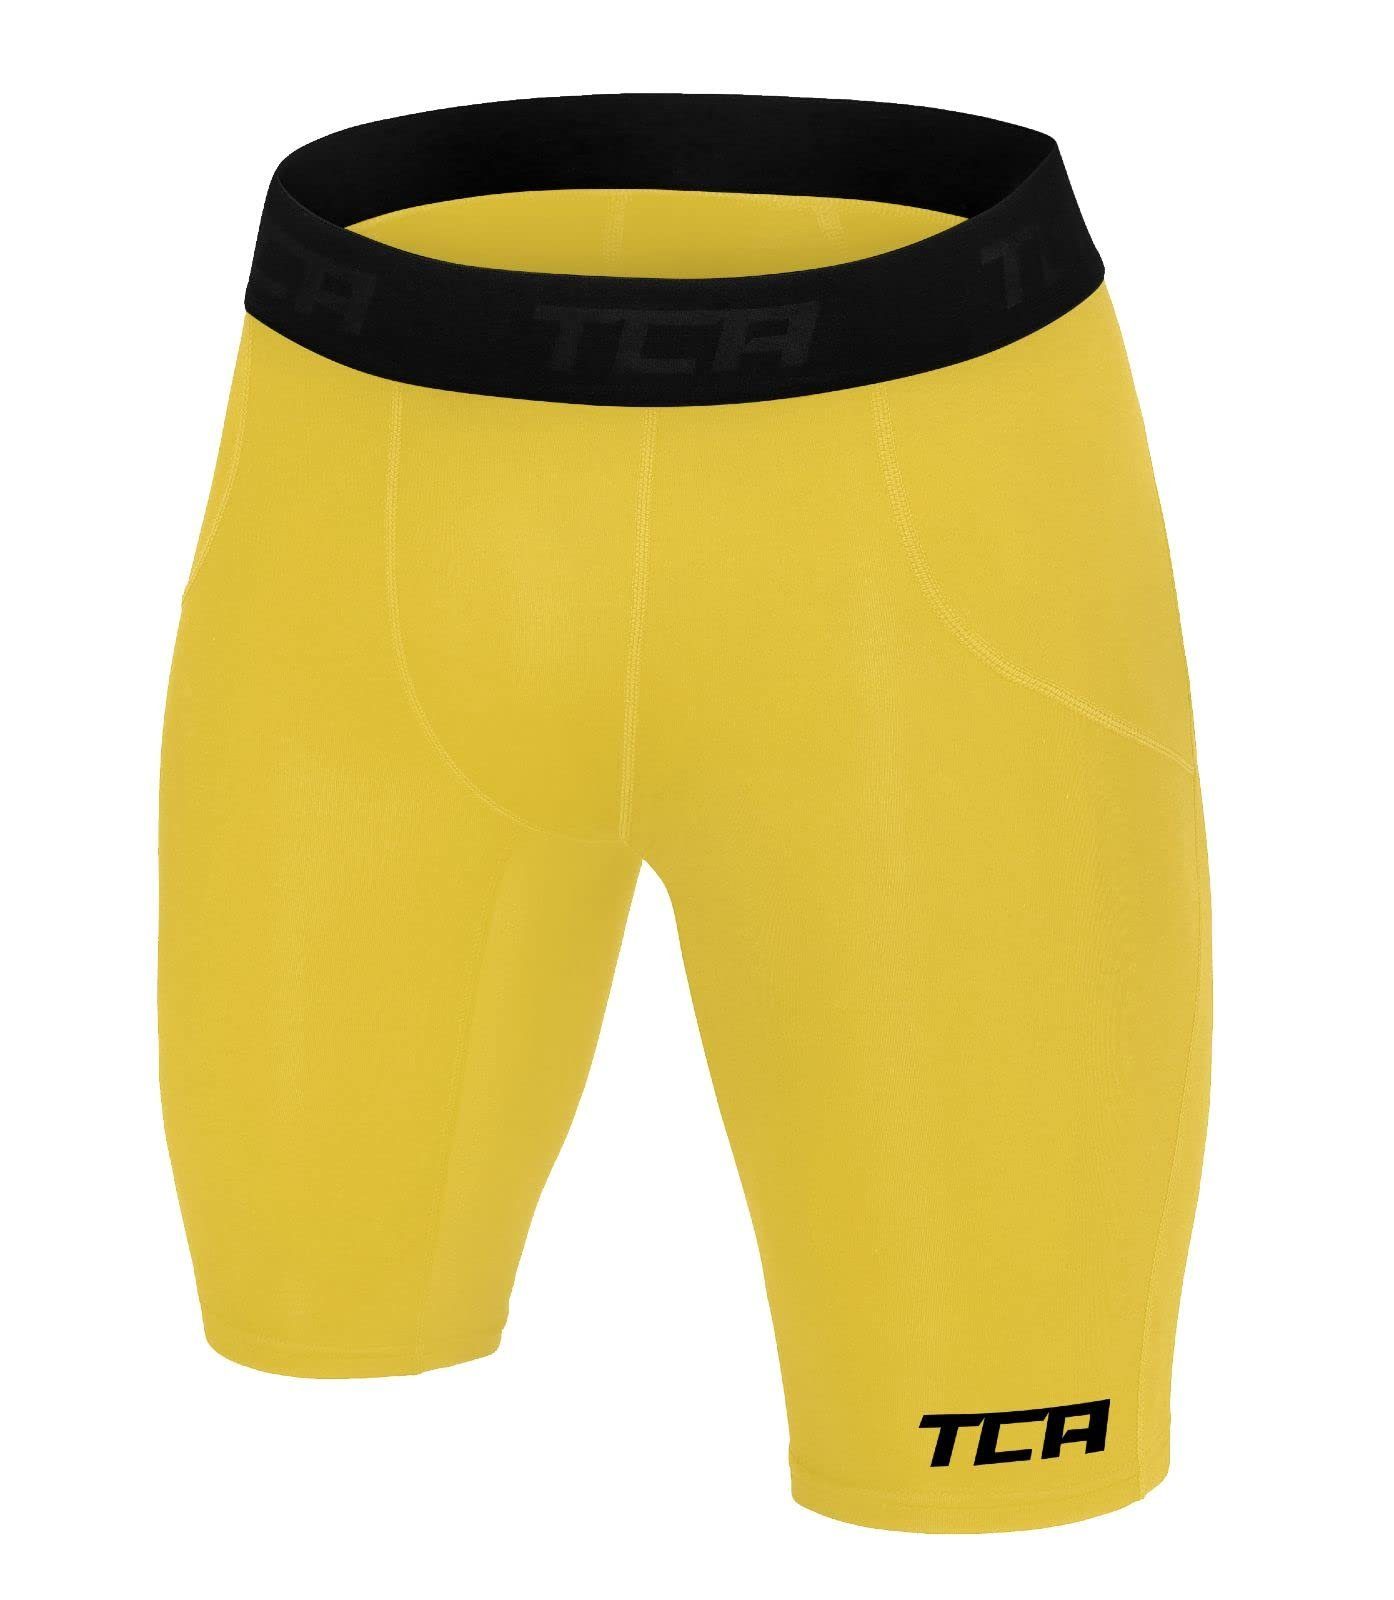 TCA 10-12 TCA - Jahre SuperThermal Gelb, Unterziehshirt Jungen Kompressions Shorts